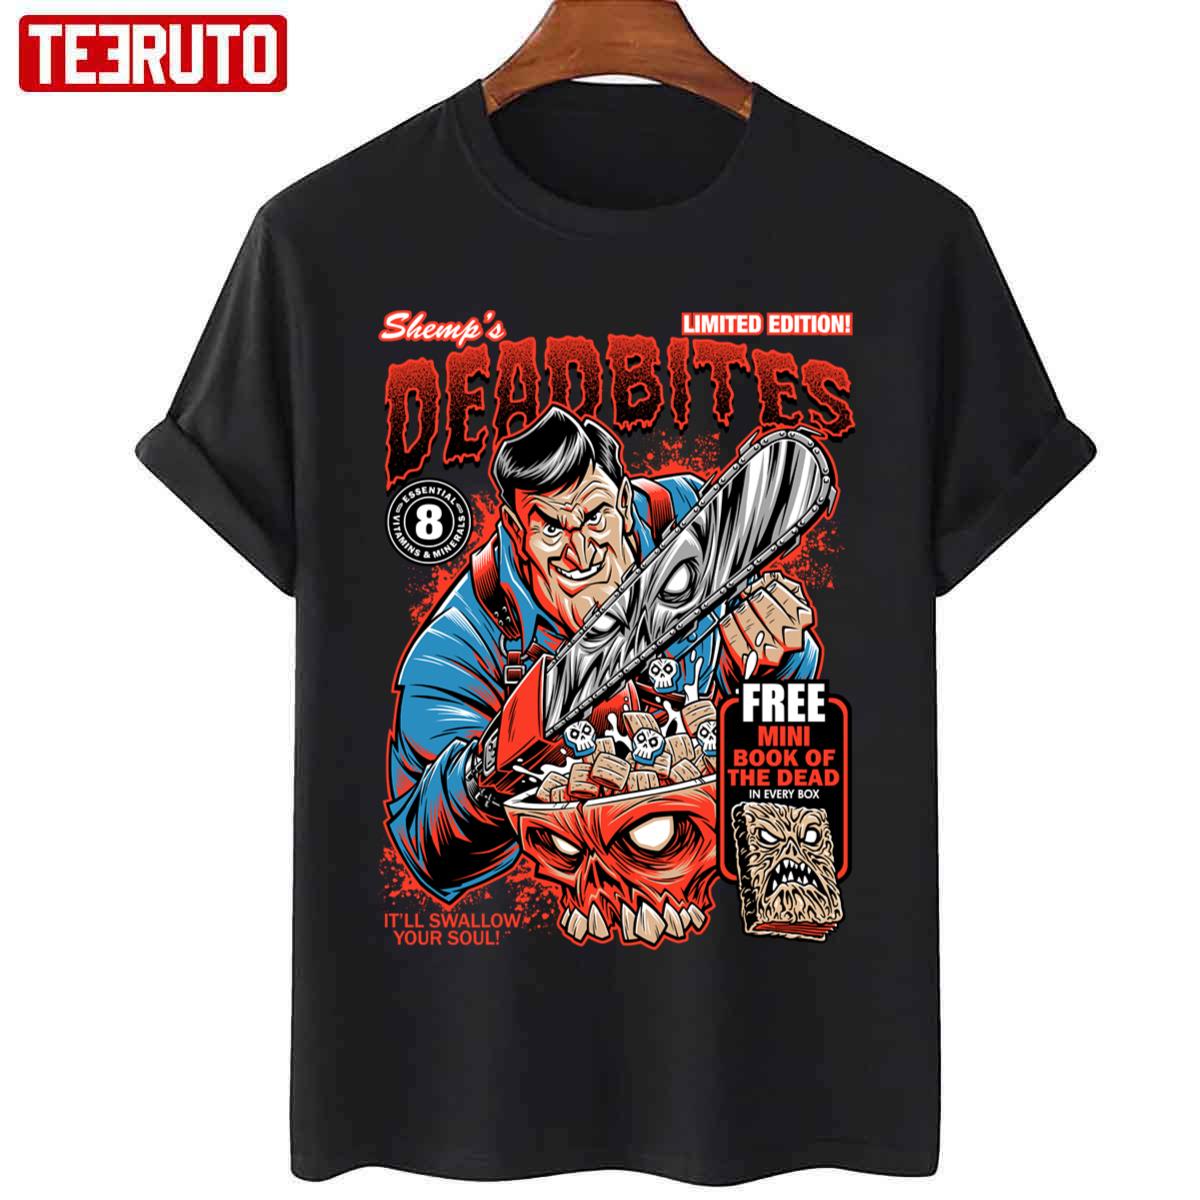 Deadbites It’s Swallow Your Soul Army Of Darkness Breakfast Cereal Parody Unisex Sweatshirt